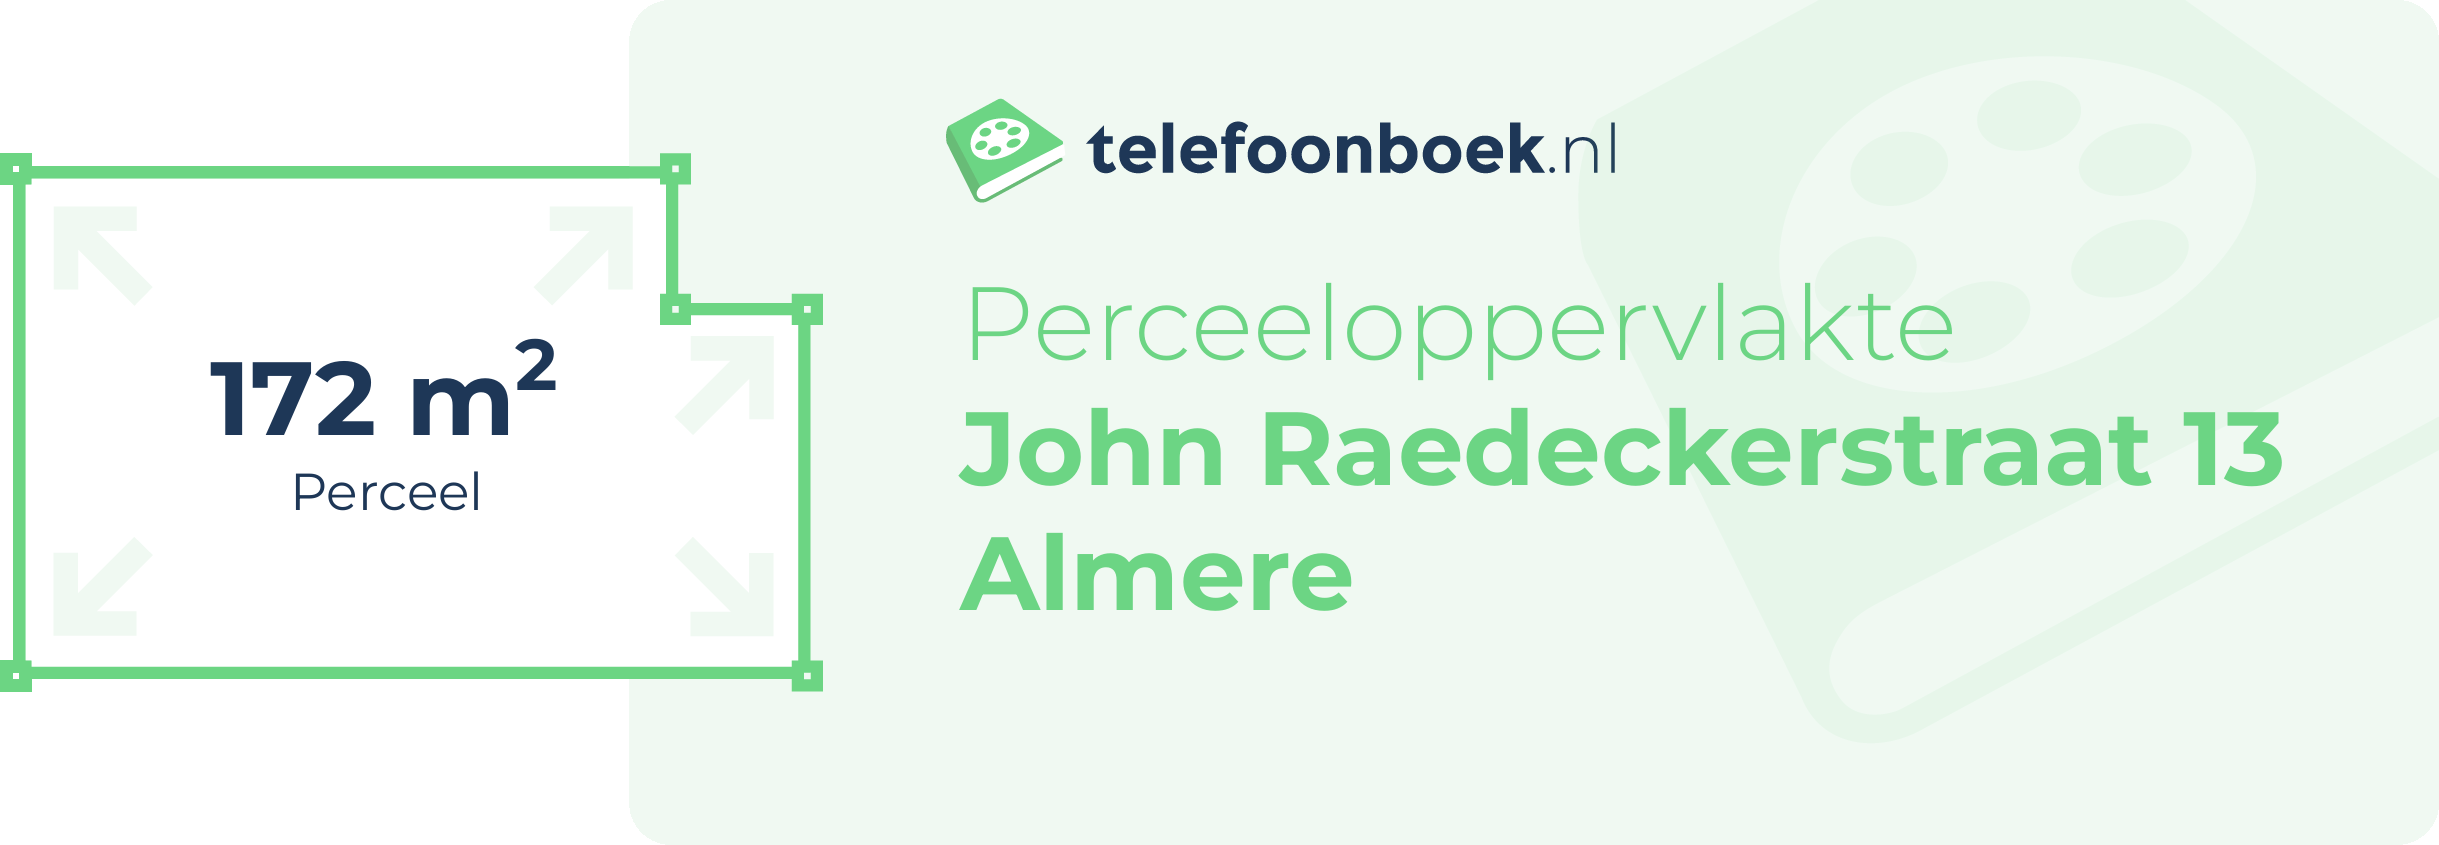 Perceeloppervlakte John Raedeckerstraat 13 Almere